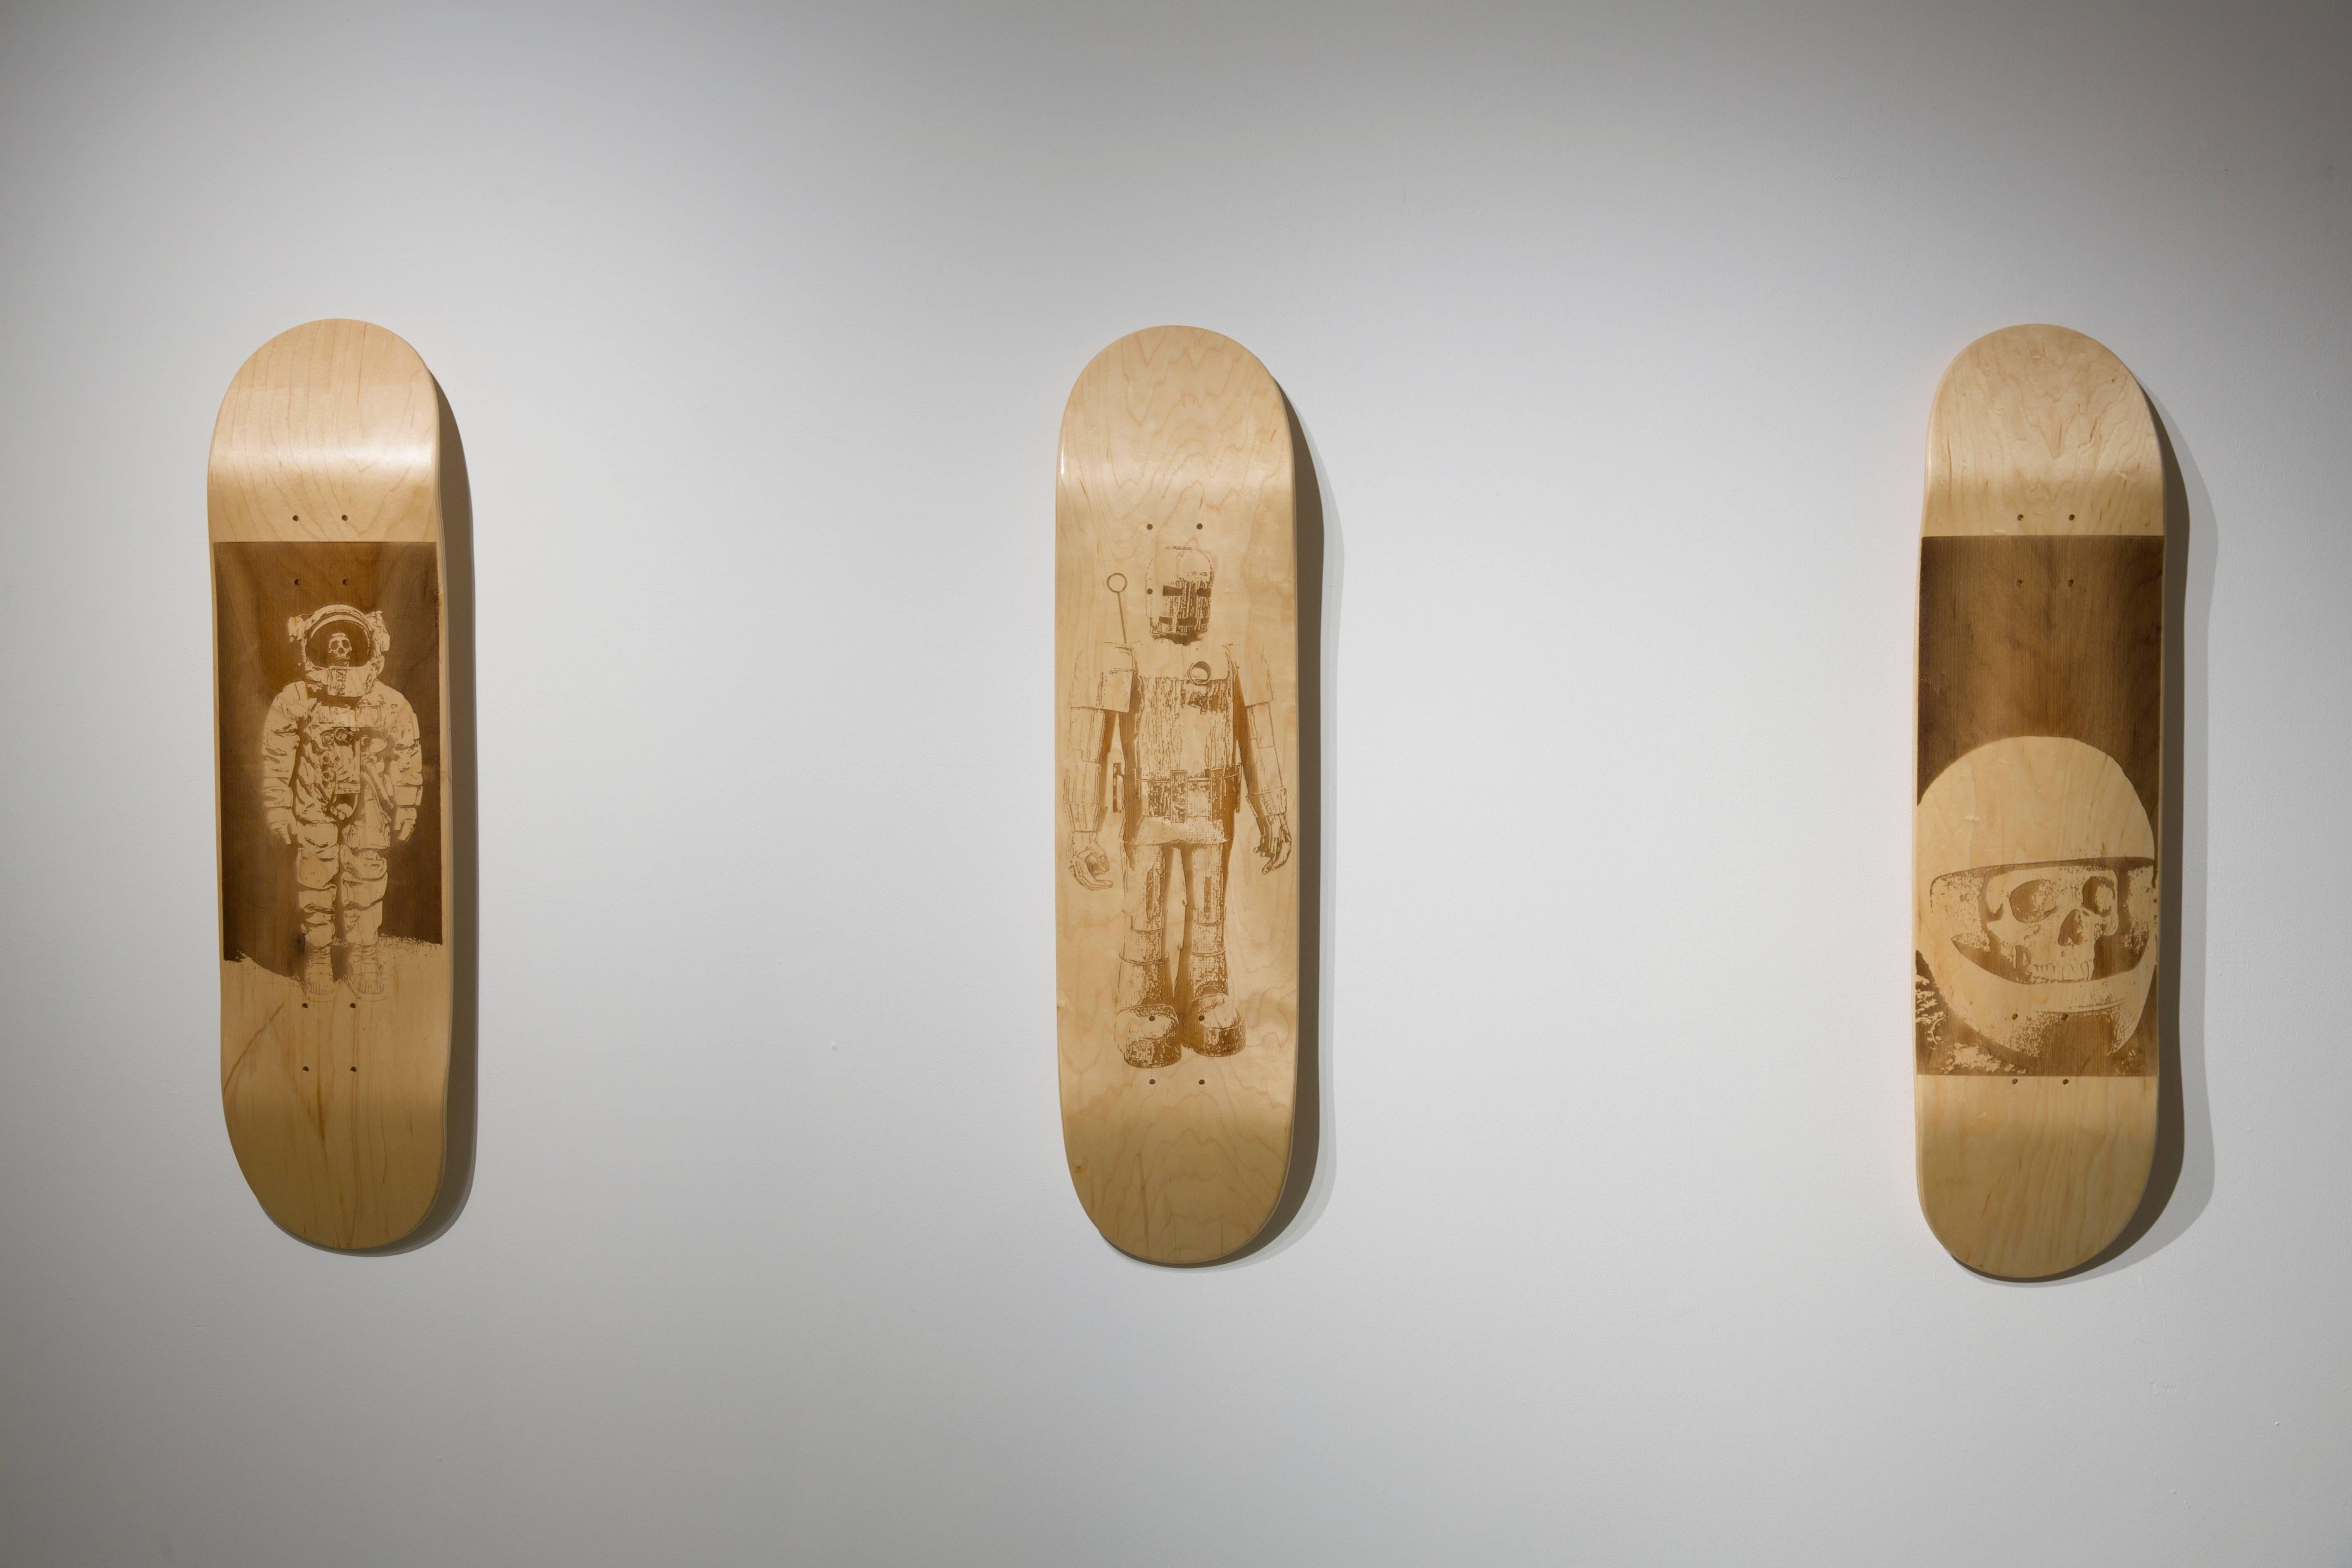 Dead Astronaut from the series Skateboard Deck - Sculpture by Brandon Vickerd